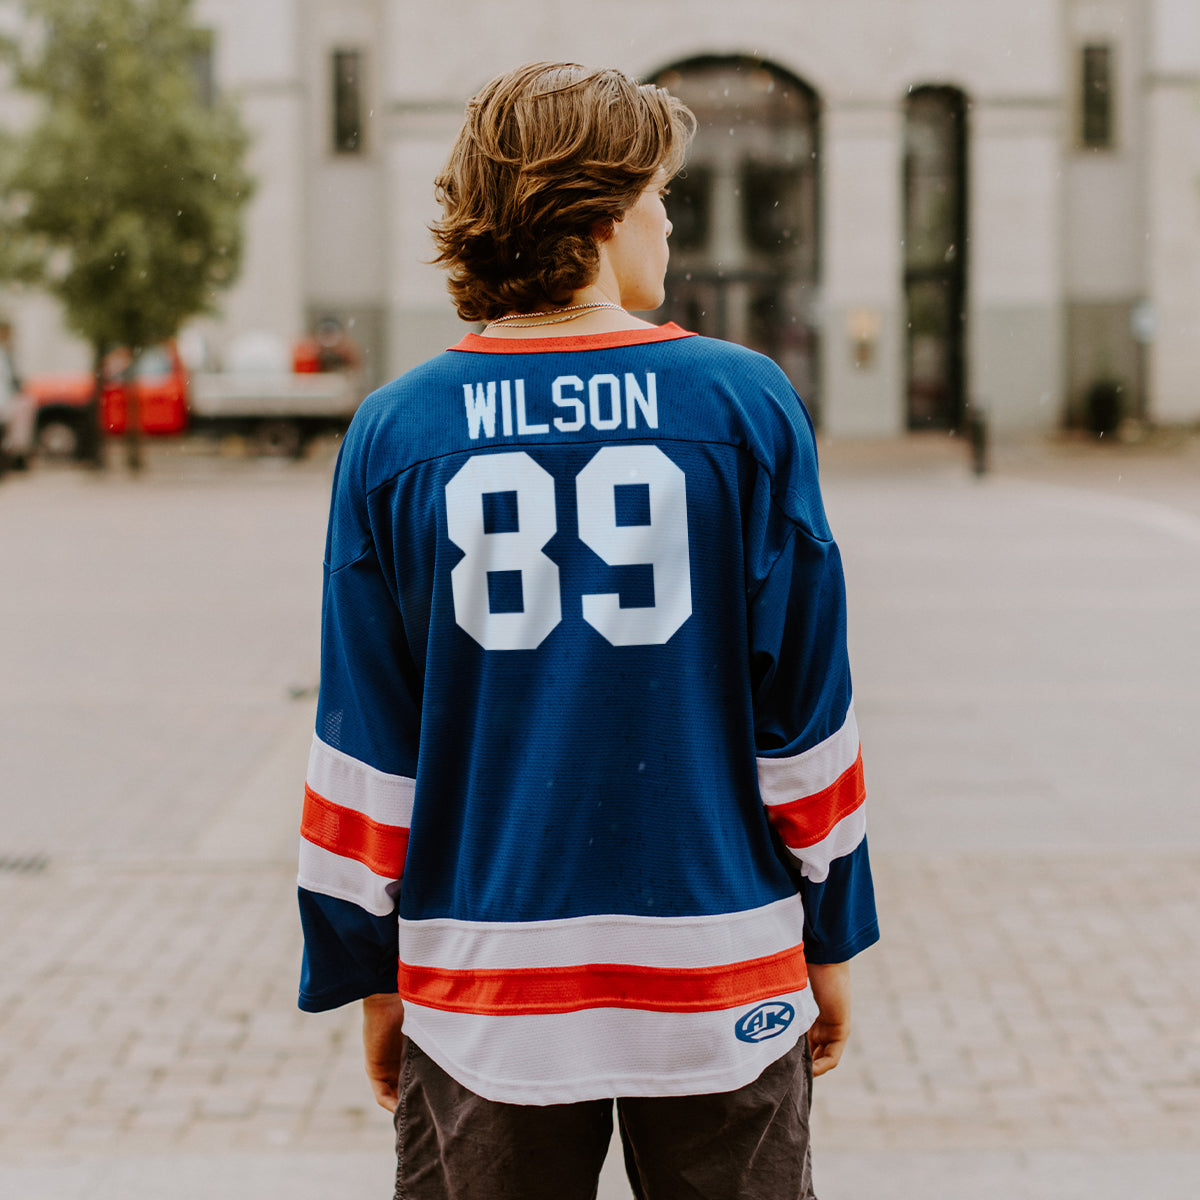 Custom Hockey Jerseys, Ice Hockey Uniforms & Socks